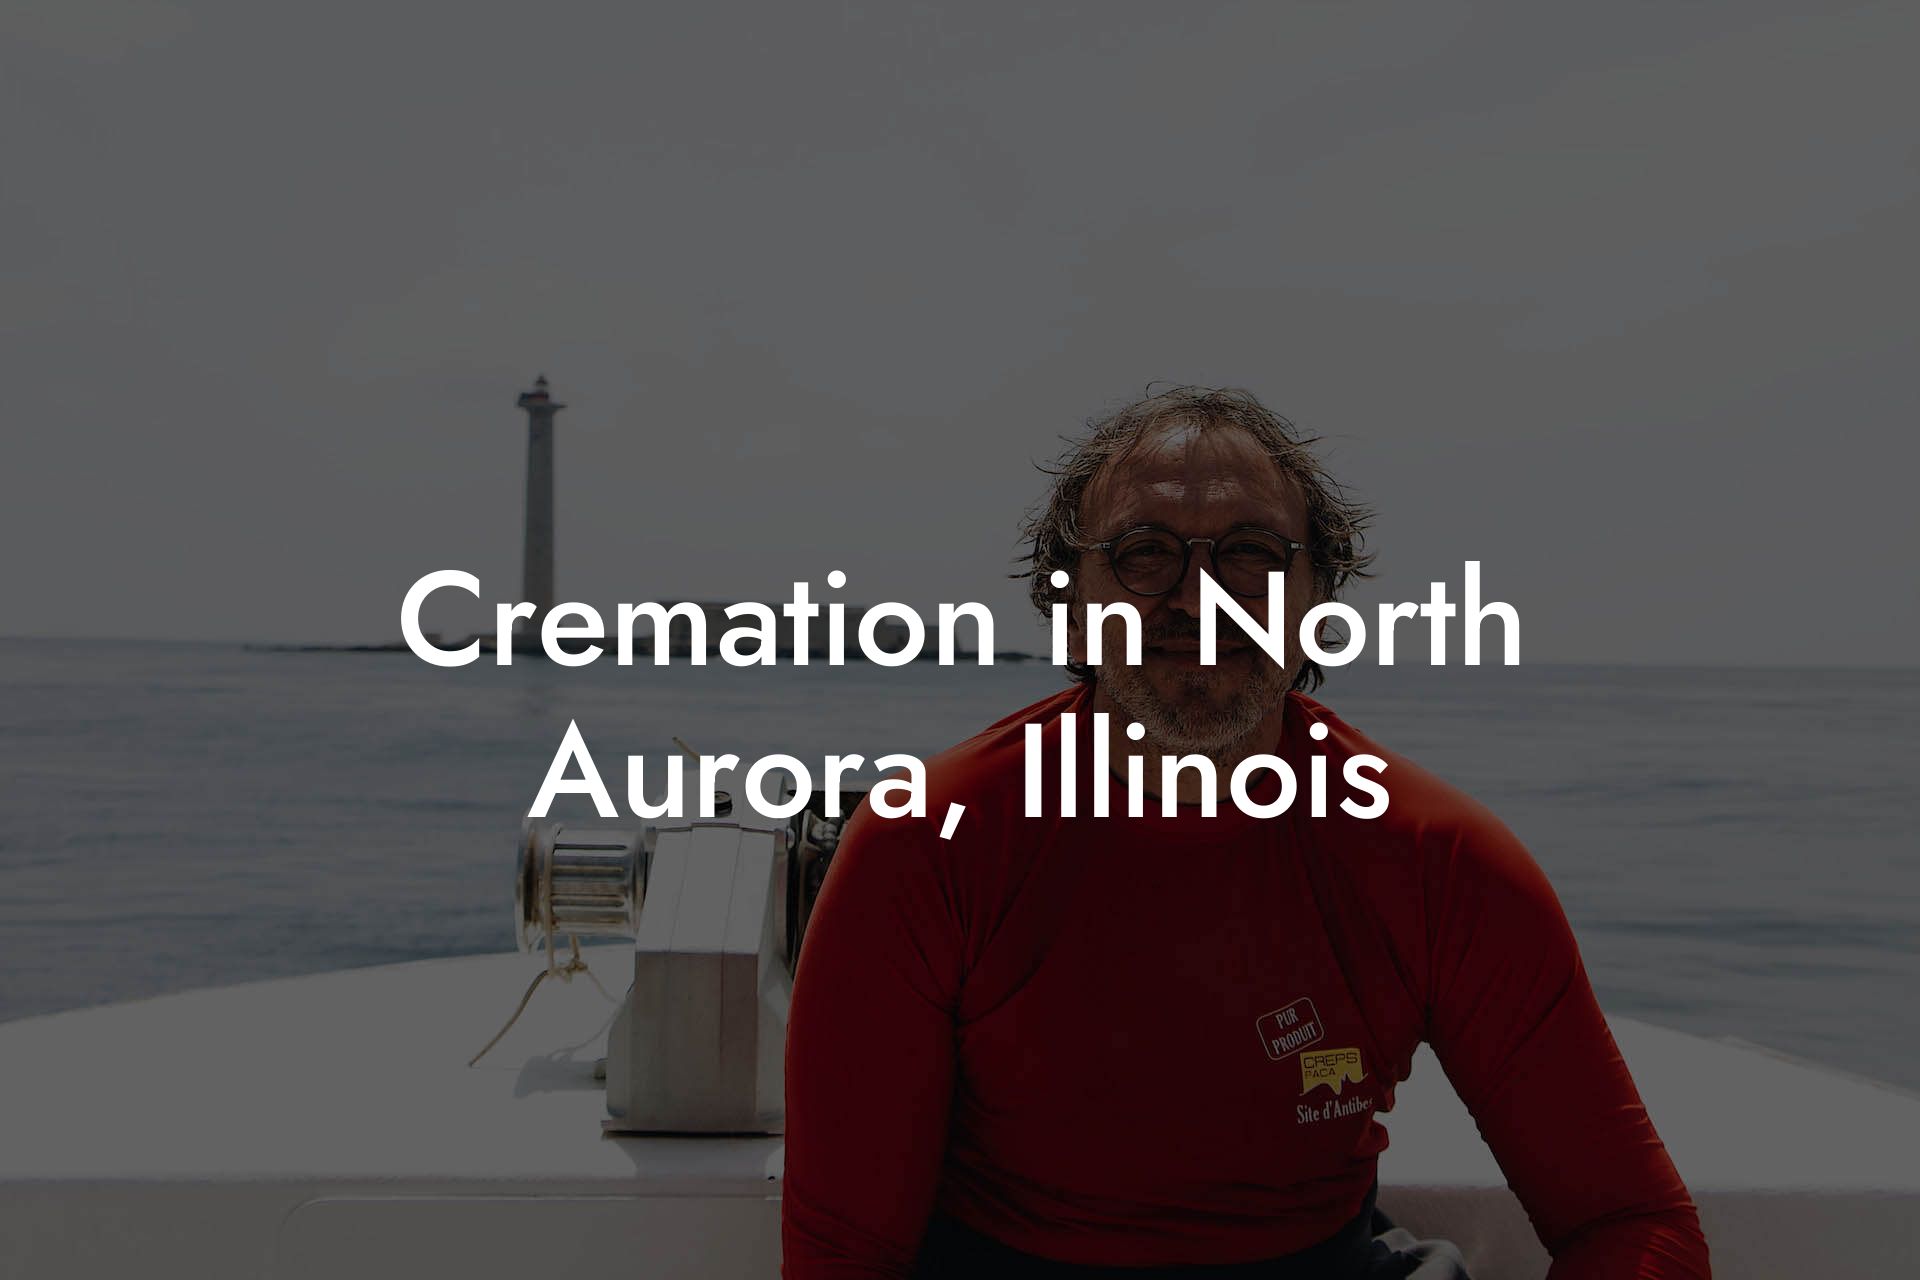 Cremation in North Aurora, Illinois